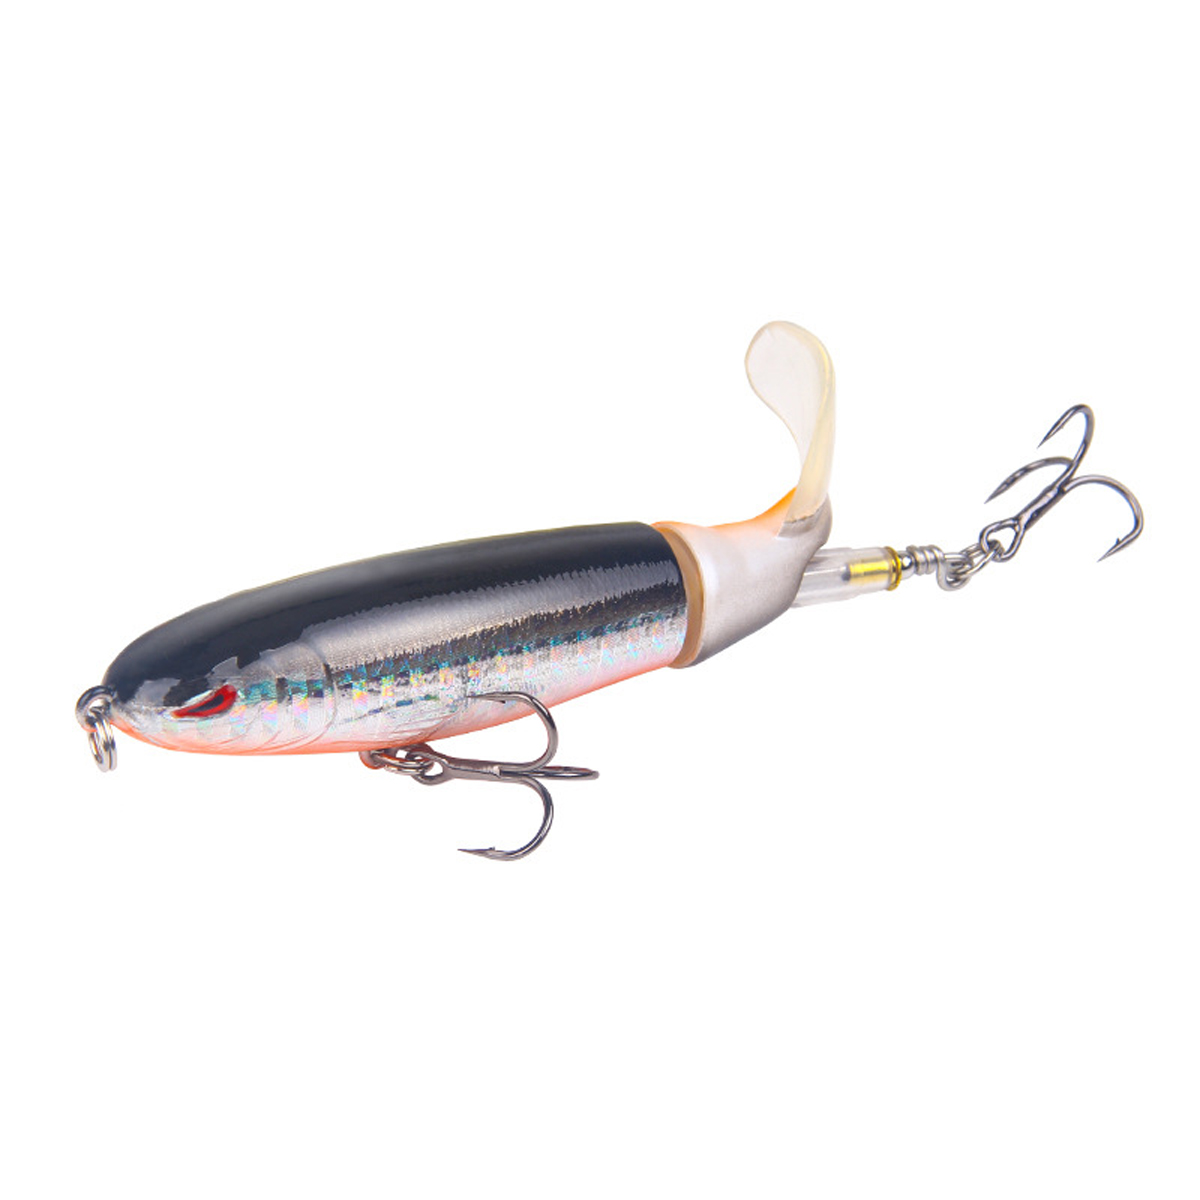 10cm-13g-Minnow-Fishing-Lure-Rotating-Tail-Popper-Topwater-Swim-Crankbait-Artificial-Hard-Bait-1354984